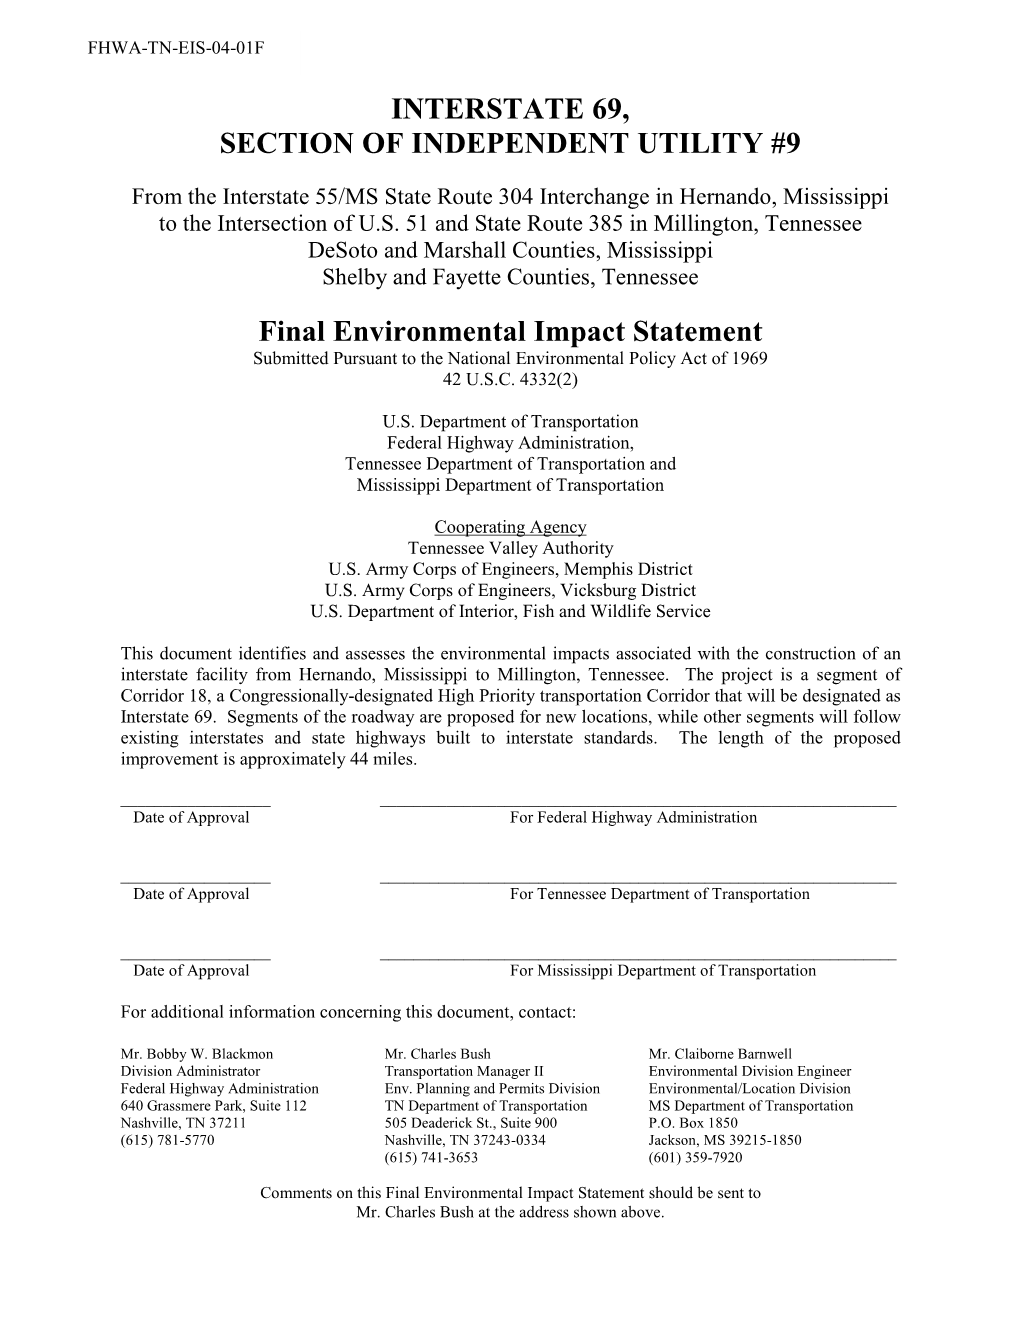 I-69 Final Eis Document 6-28-06